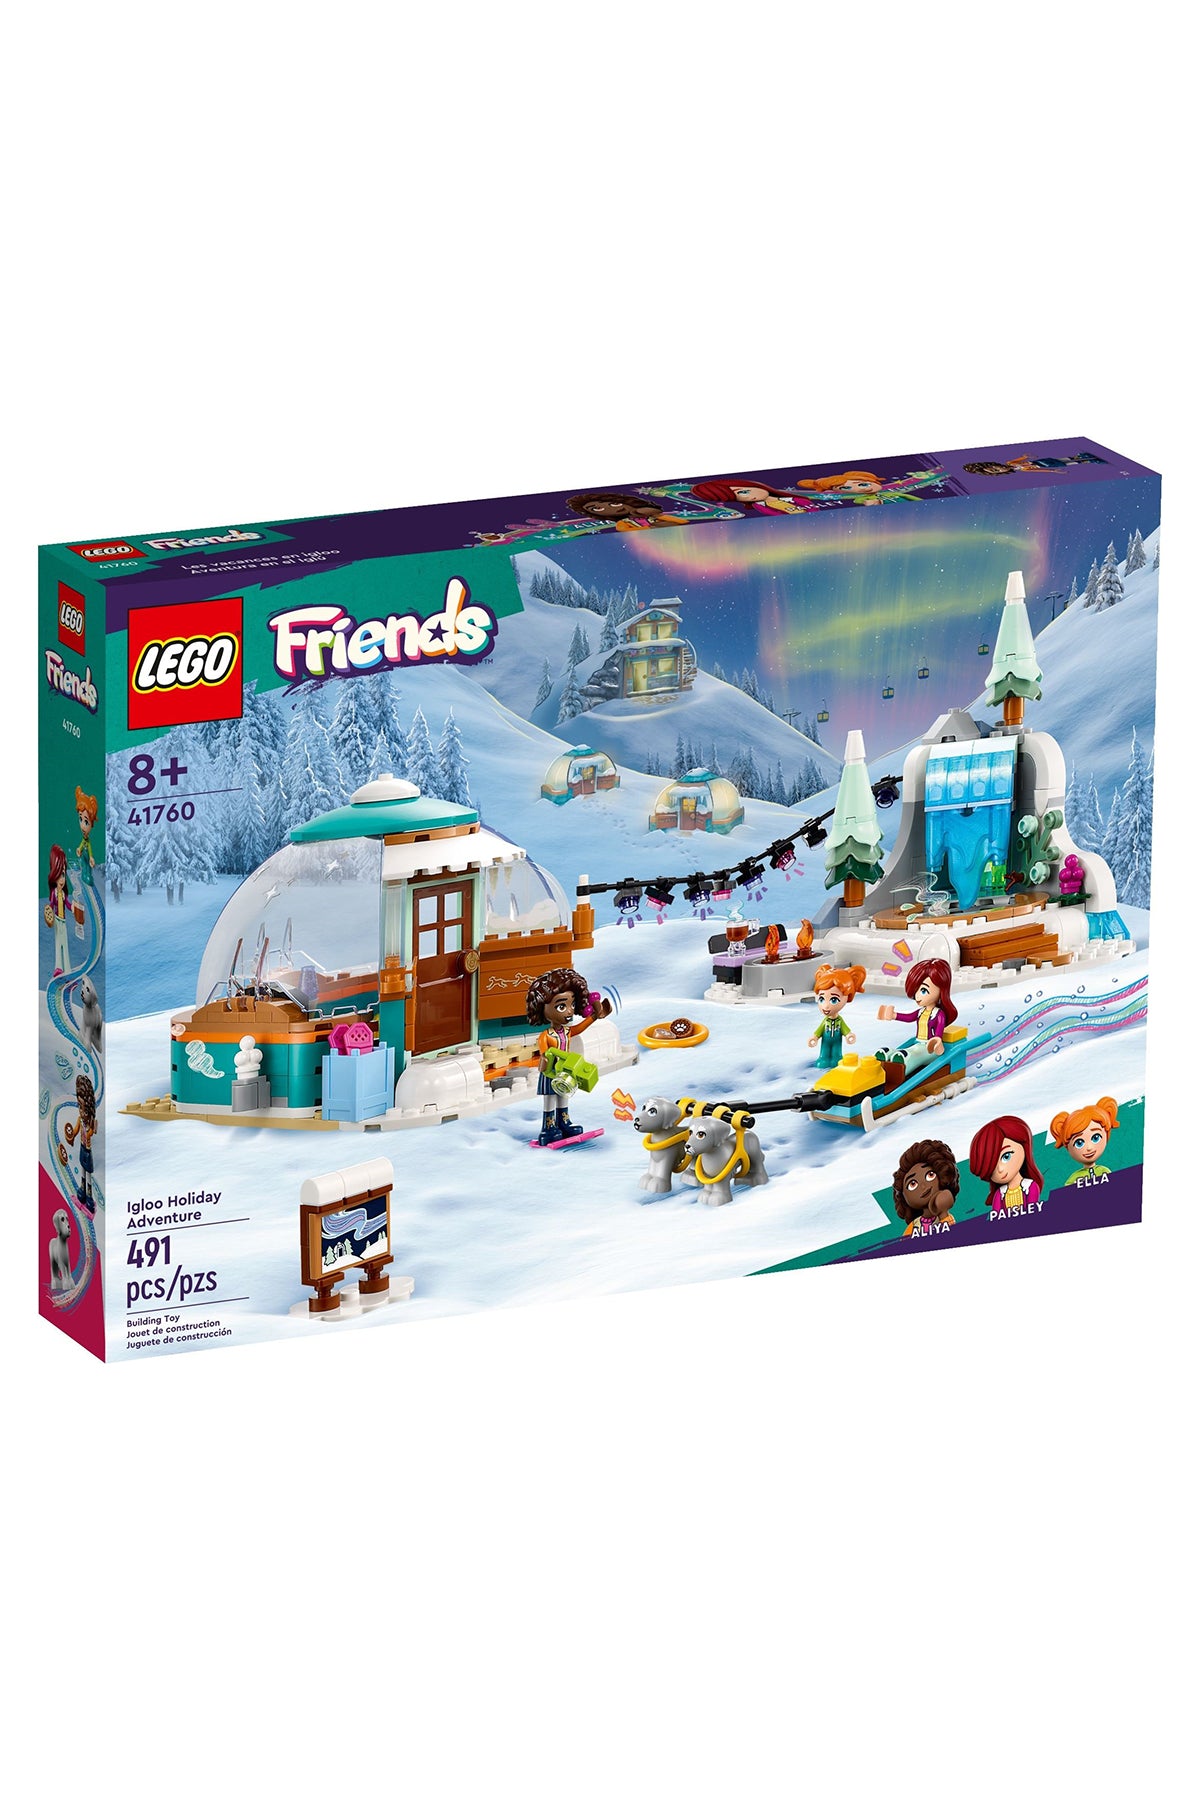 Lego Friends : Igloo Holiday Adventure